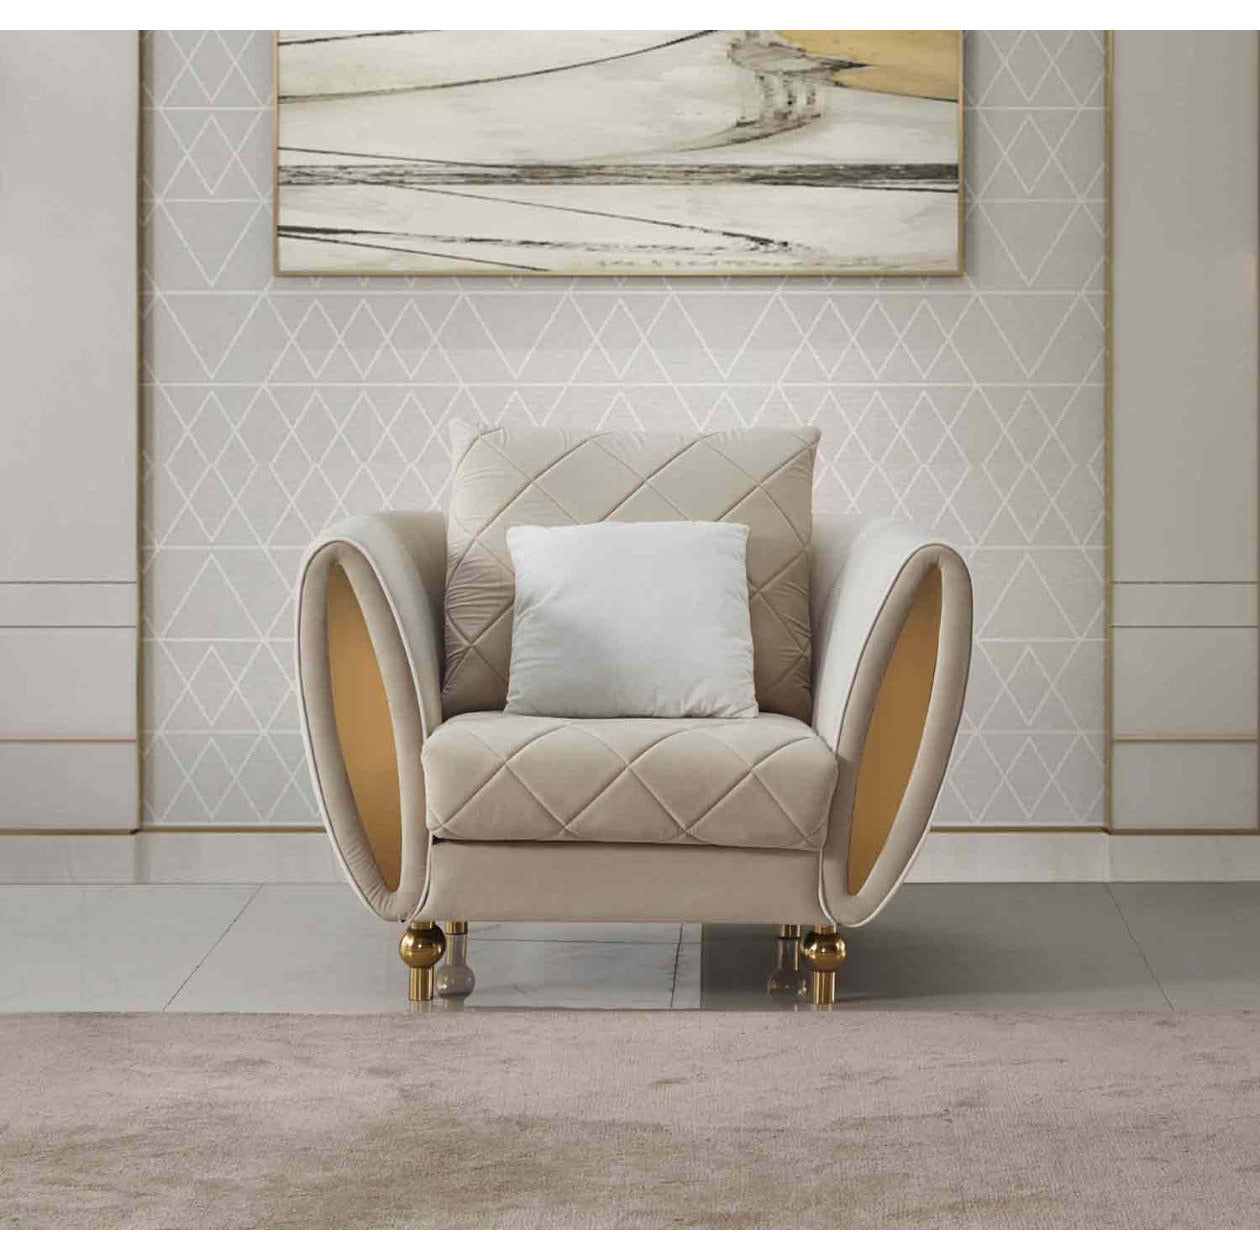 European Furniture - Sipario Vita 3 Piece Living Room Set in Beige - 22562-SET3 - New Star Living